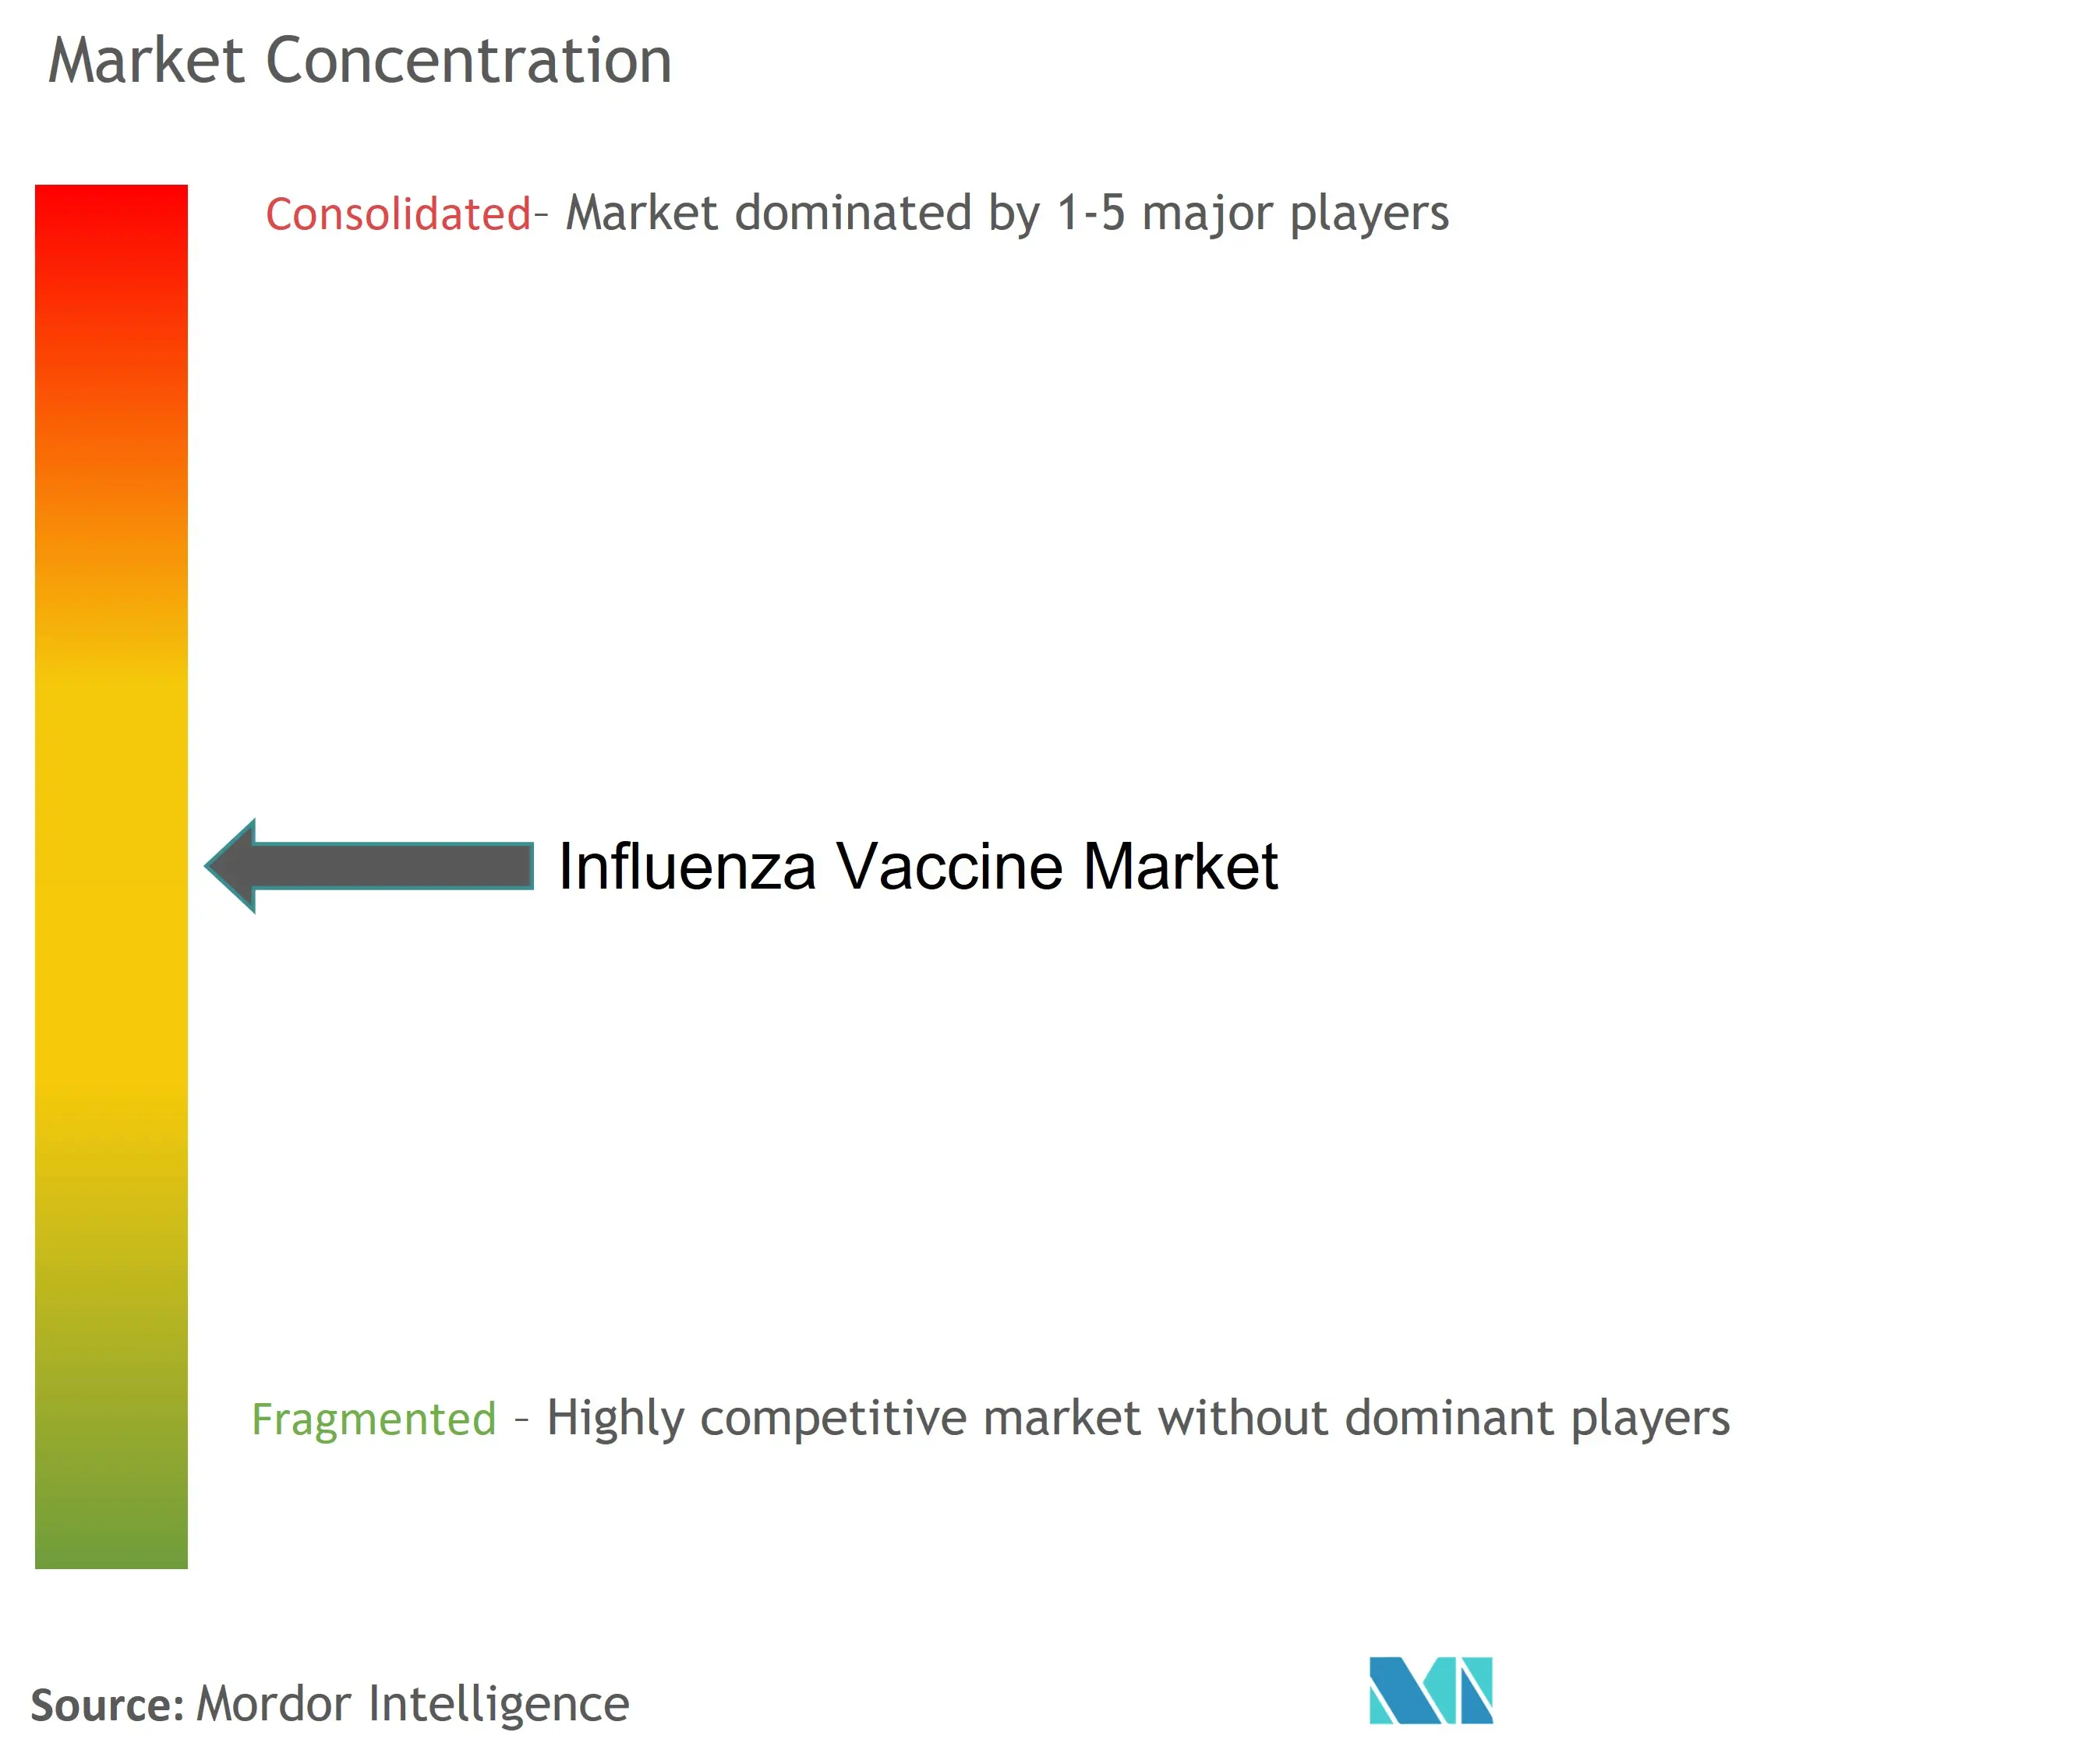 Influenza Vaccine Market Concentration